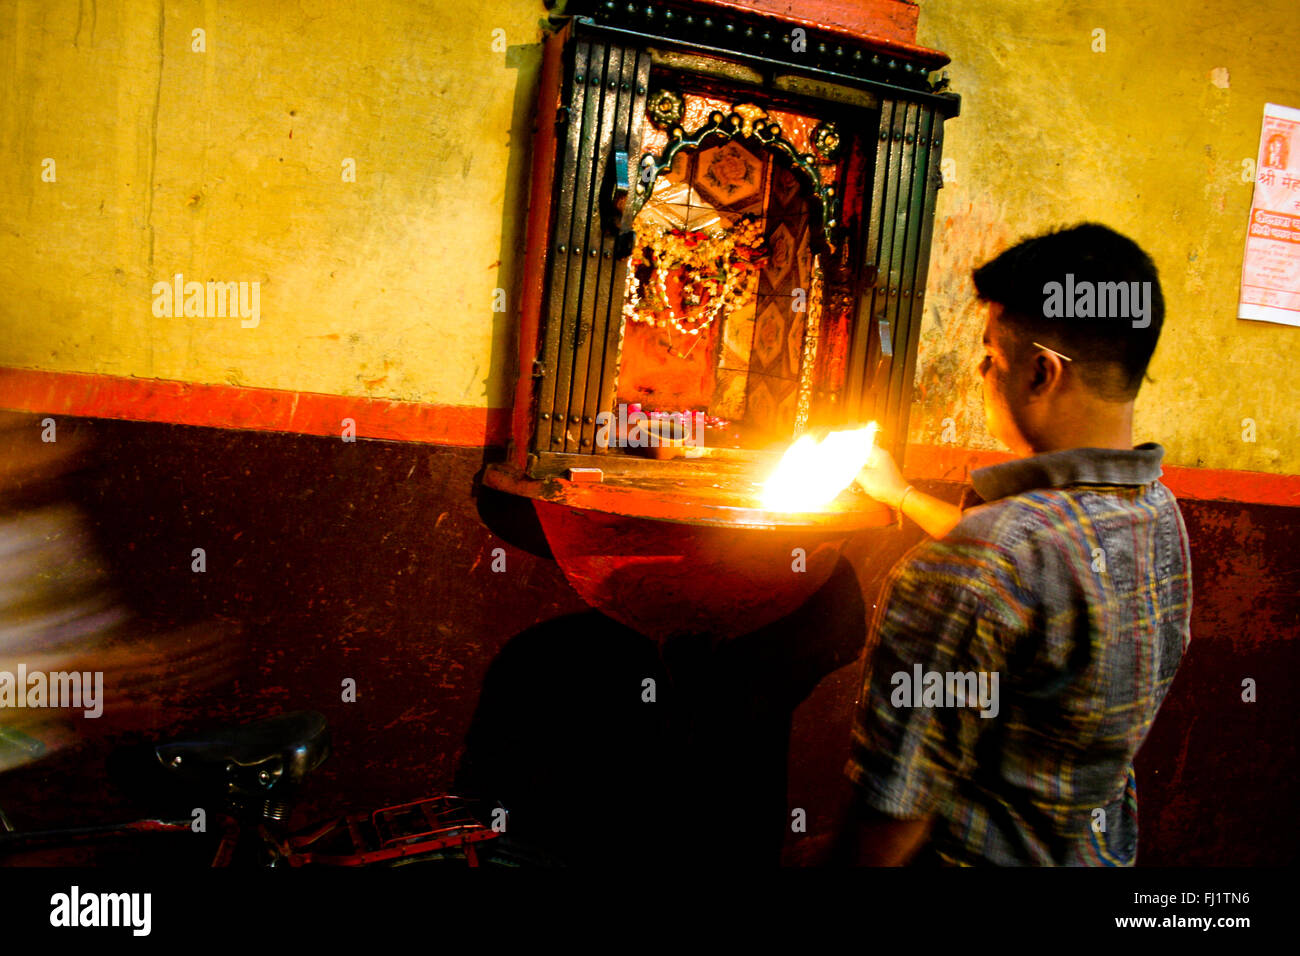 Hindu man praying in temple in a narrow street of Varanasi, India Stock Photo